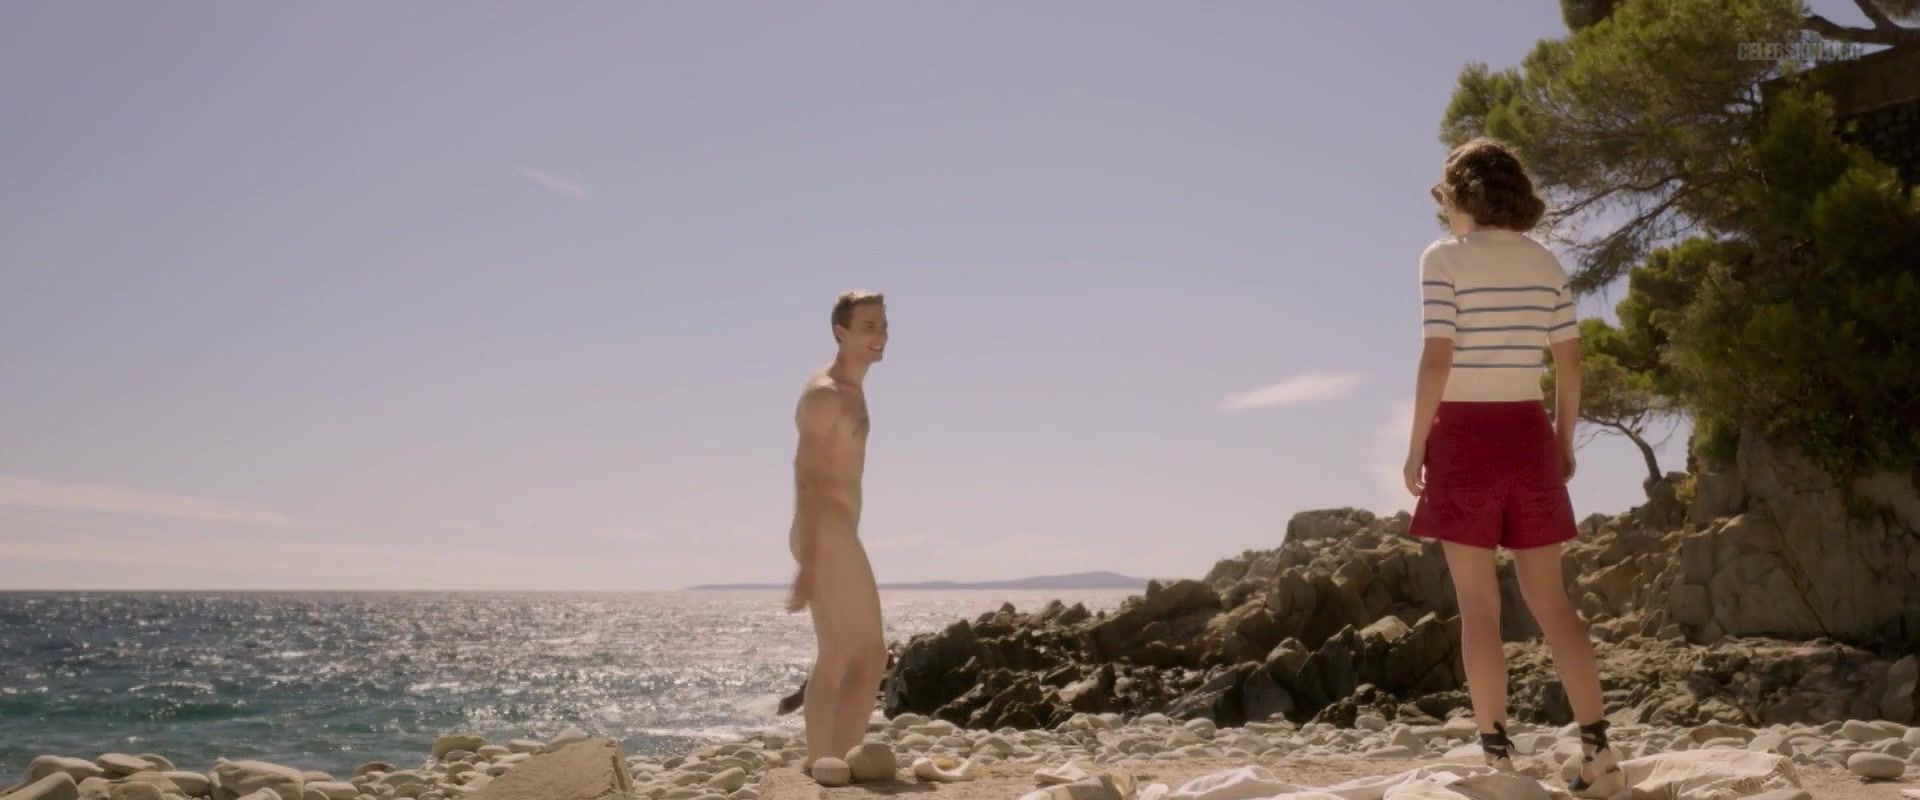 Free Amature Porn Natalie Portman naked - Planetarium (2016) BadJoJo